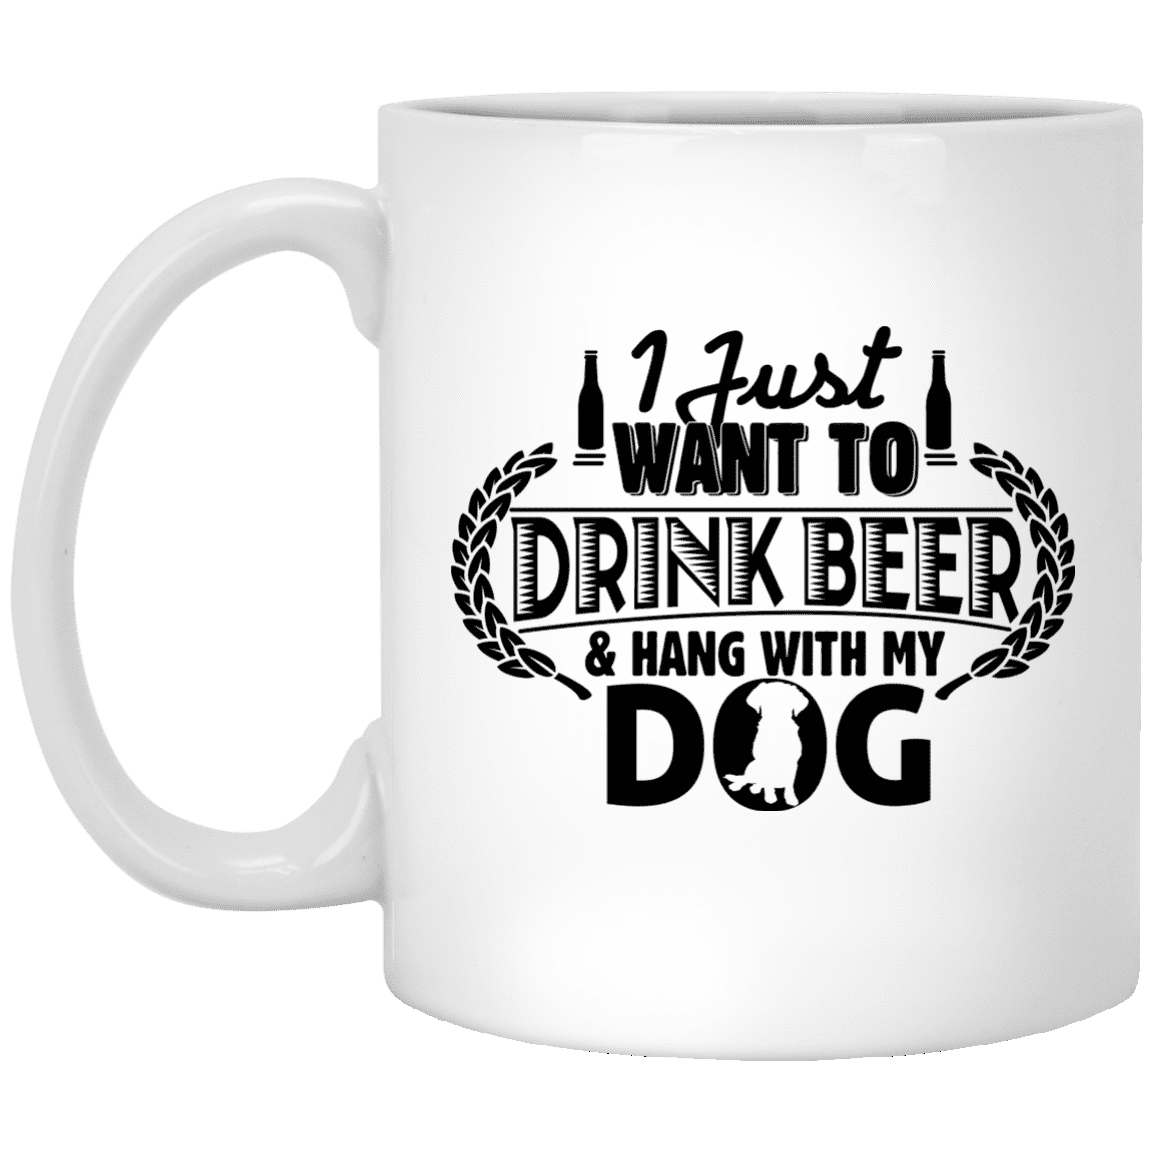 Drink Beer Hang With My Dog - Mugs.